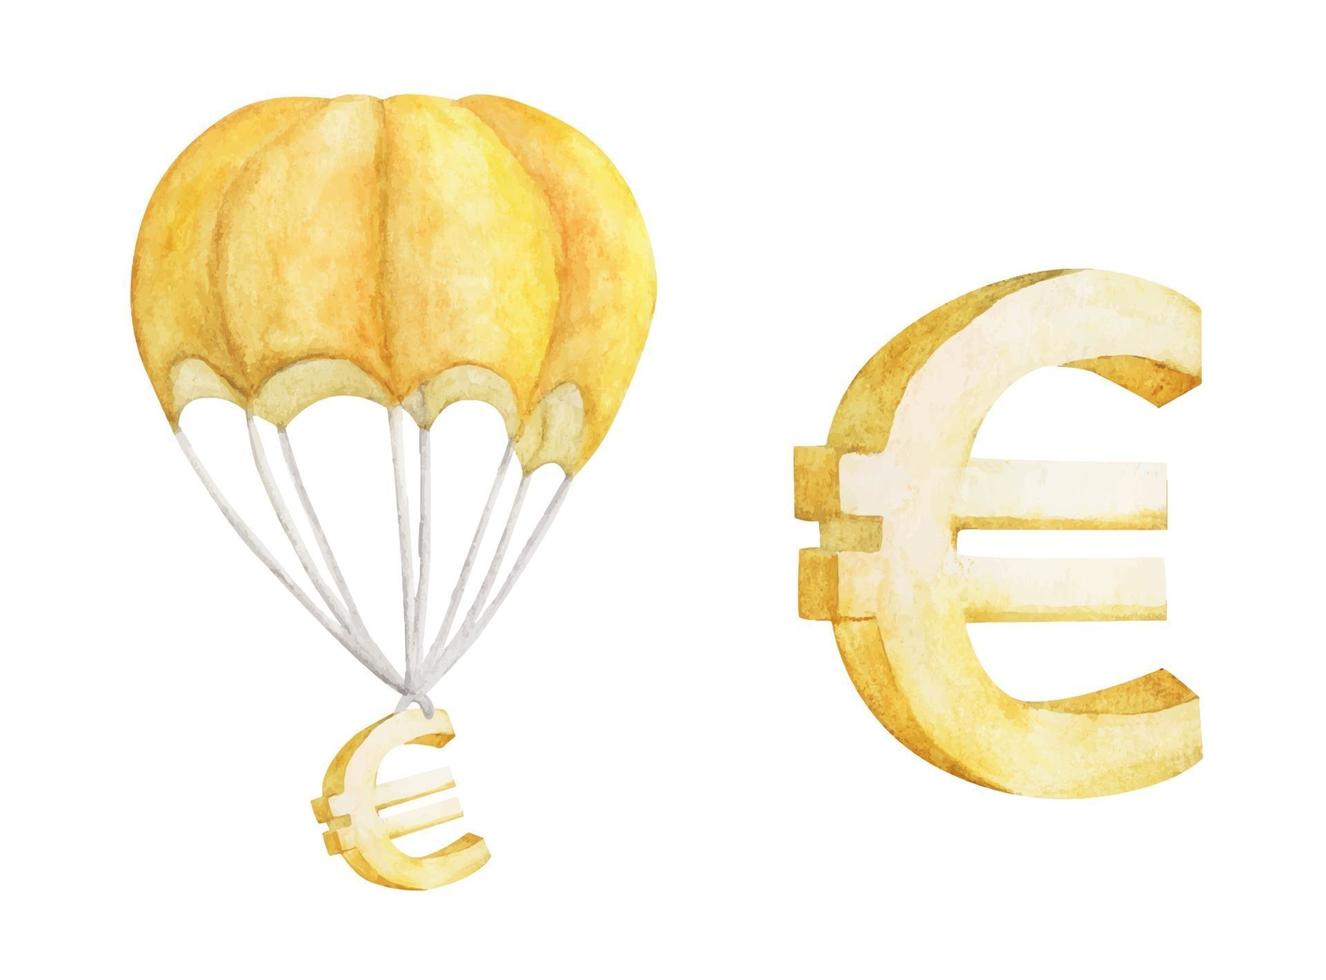 Globo de aire caliente con euro dorado. Ilustración acuarela. vector